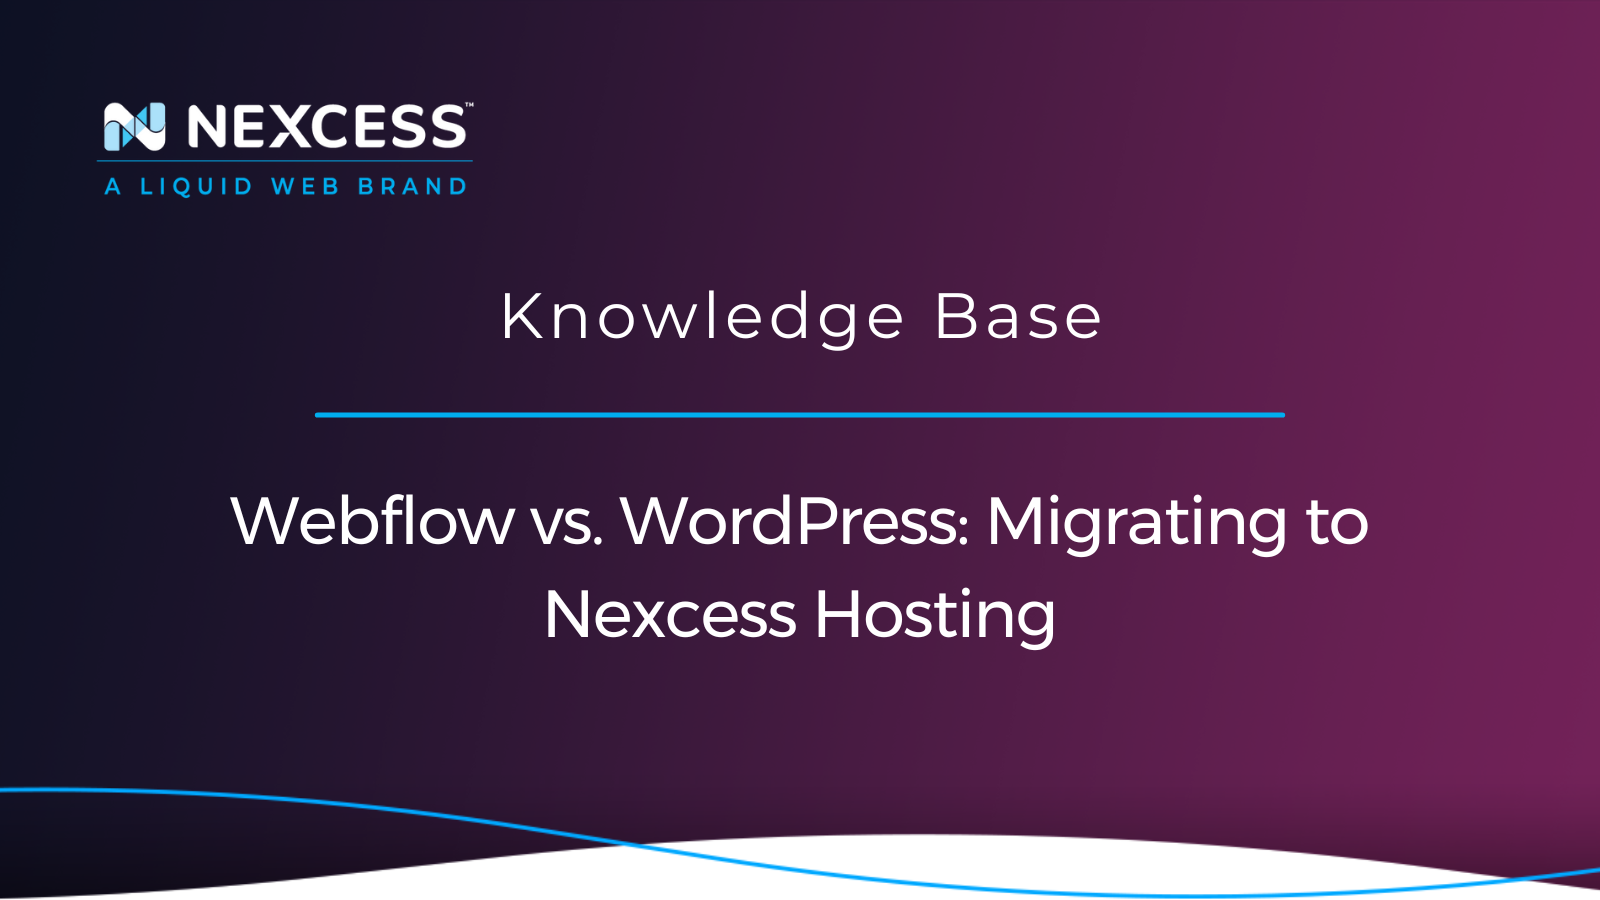 Webflow vs. WordPress: Migrating to Nexcess Hosting